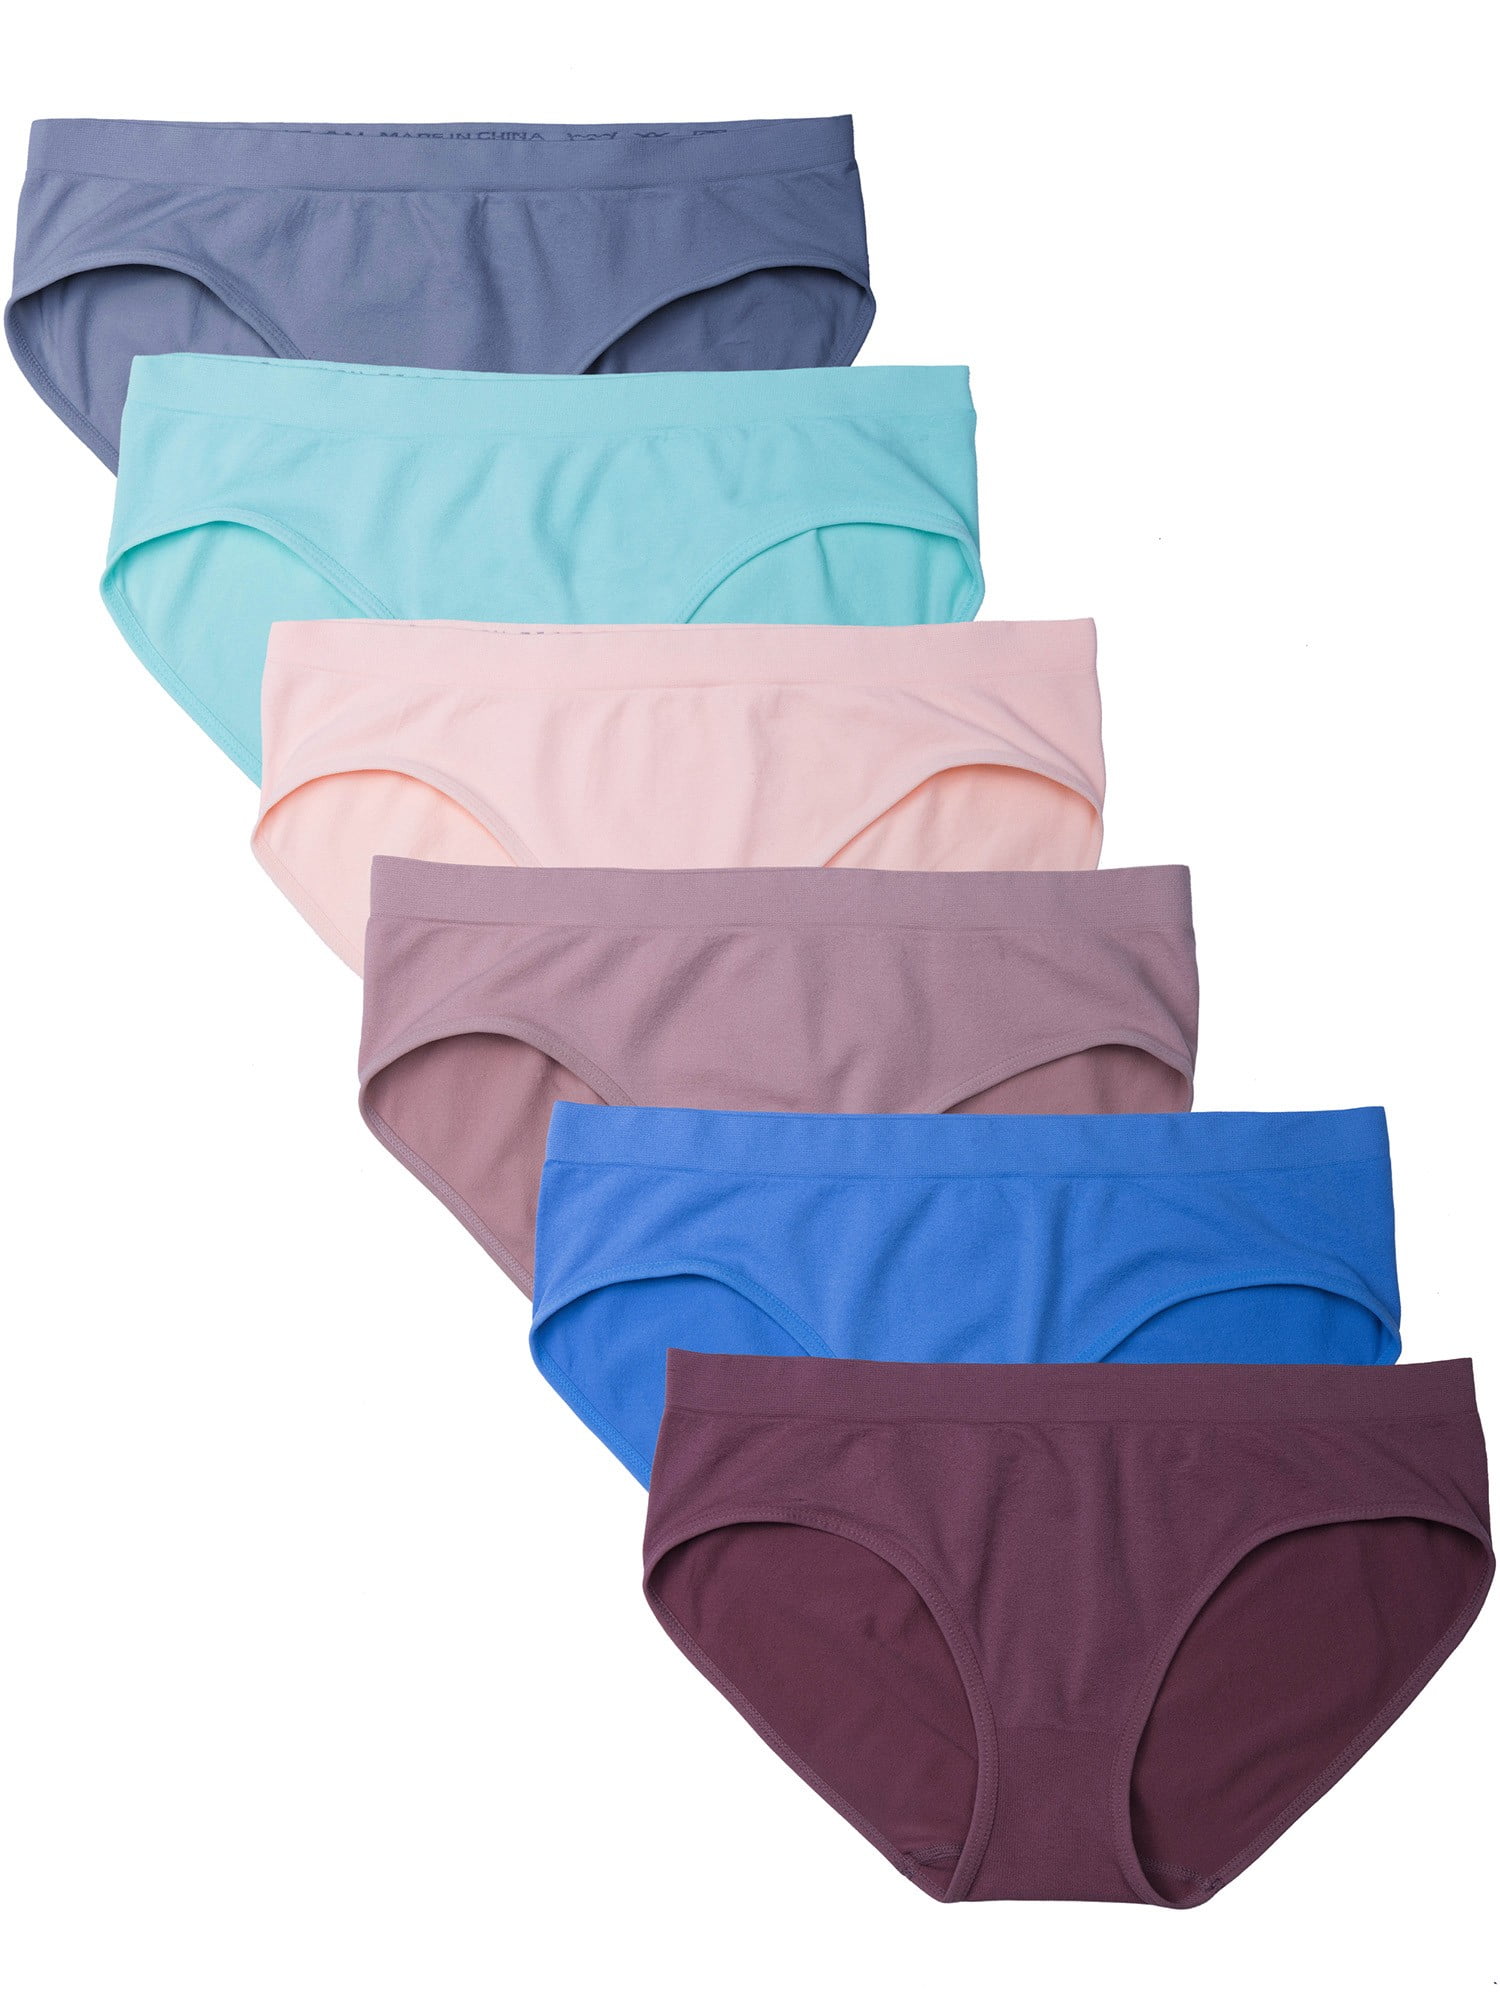 Kalon 6 Pack Womens Nylon Spandex Thong Underwear (Medium, Light Vintage)